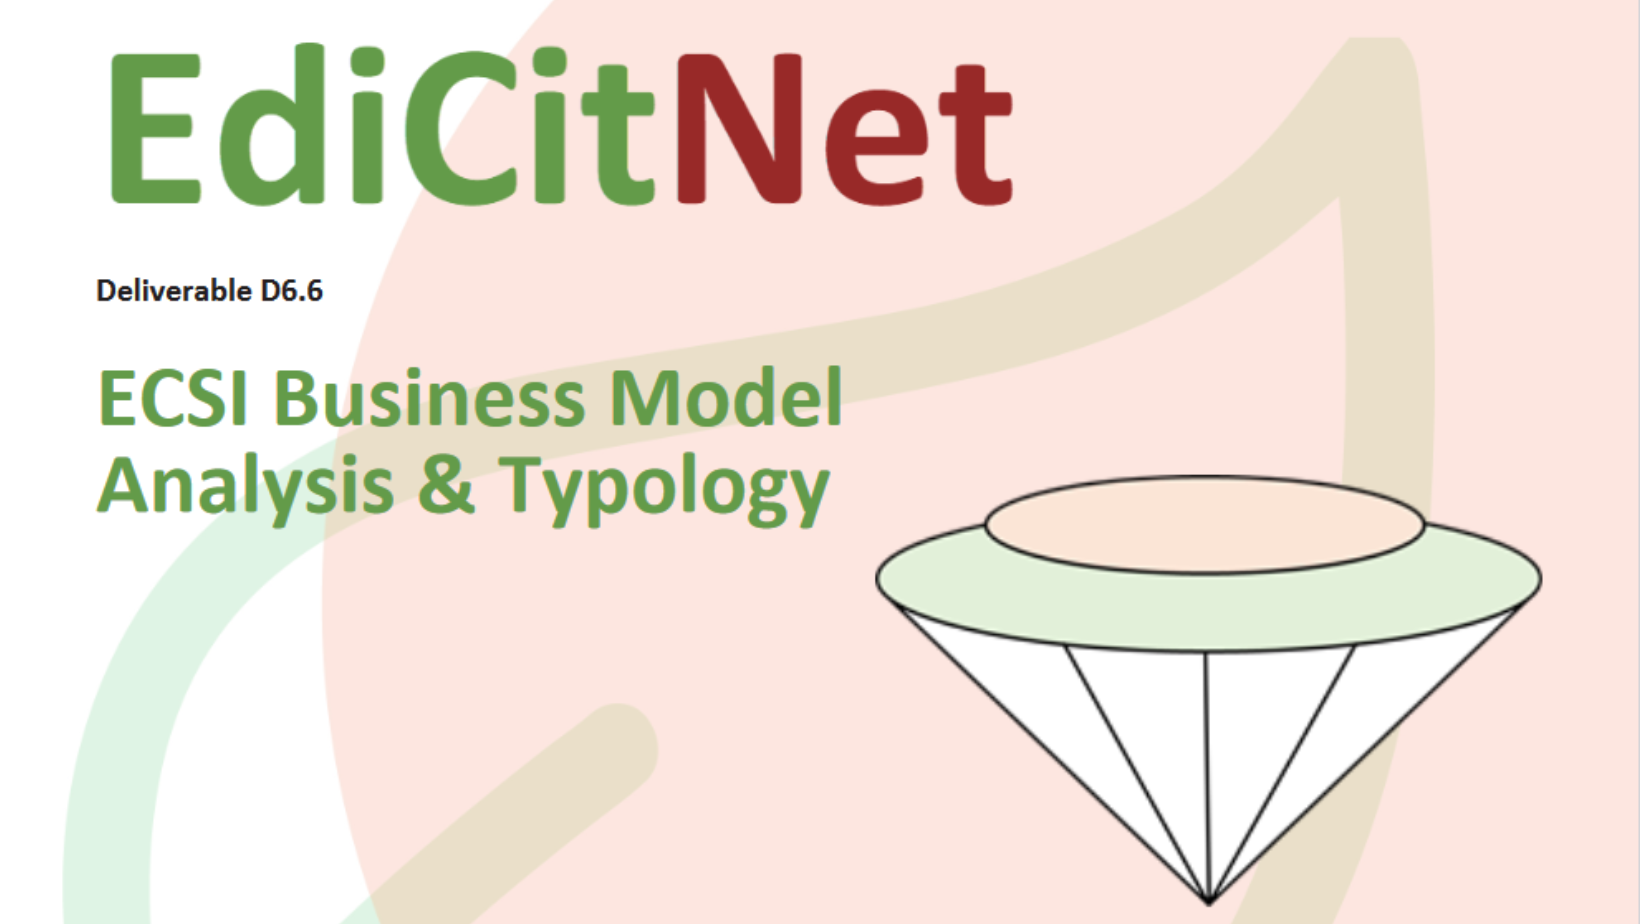 Full report on EdiCitNet ECSI Business Model Analysis & Typology